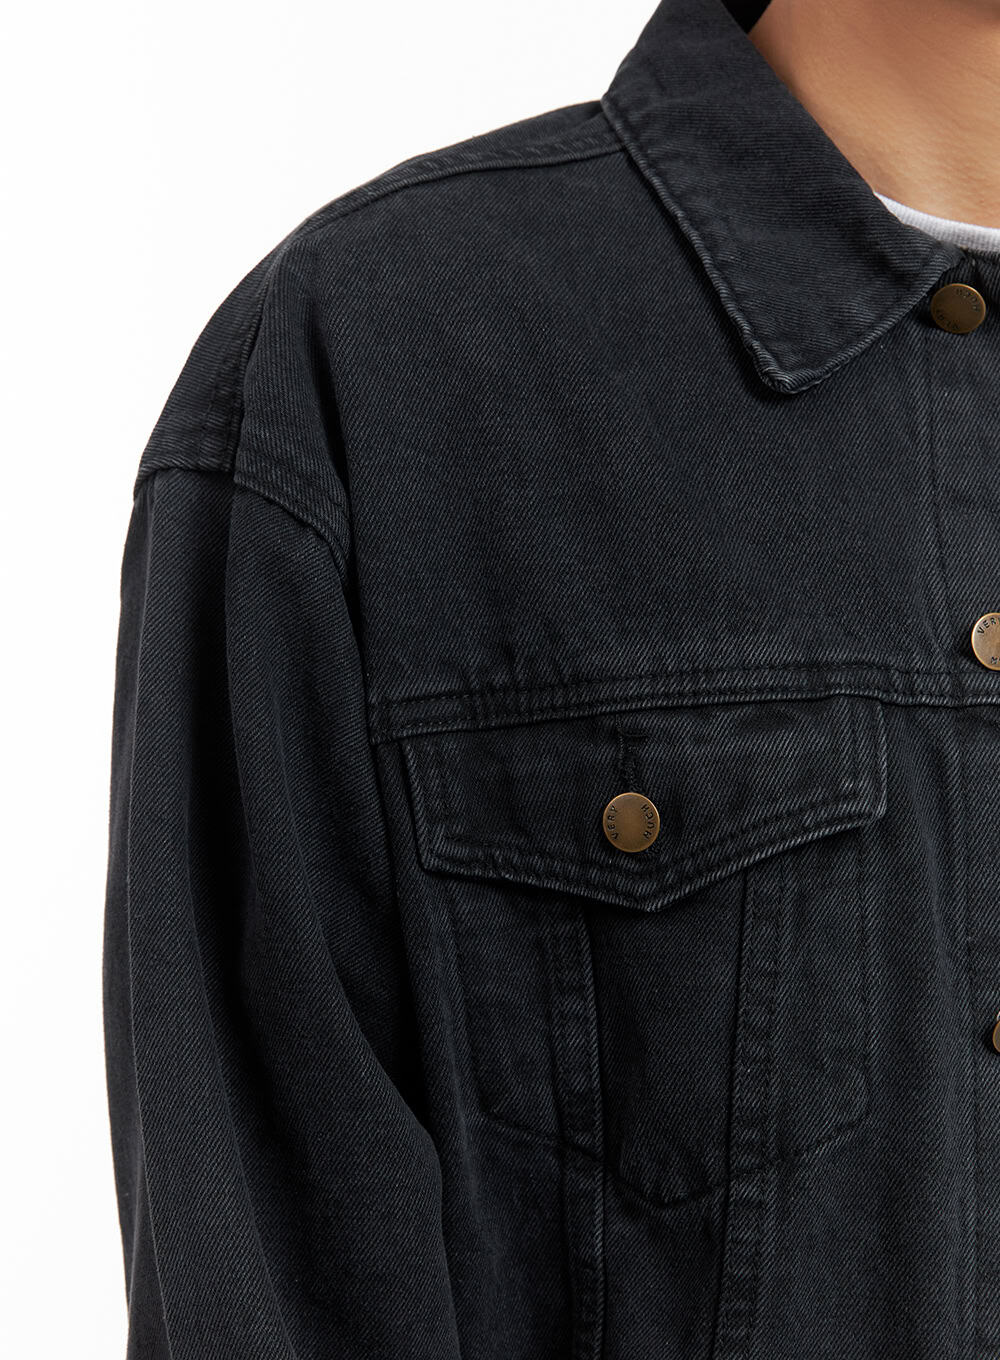 mens-denim-buttoned-jacket-iy410